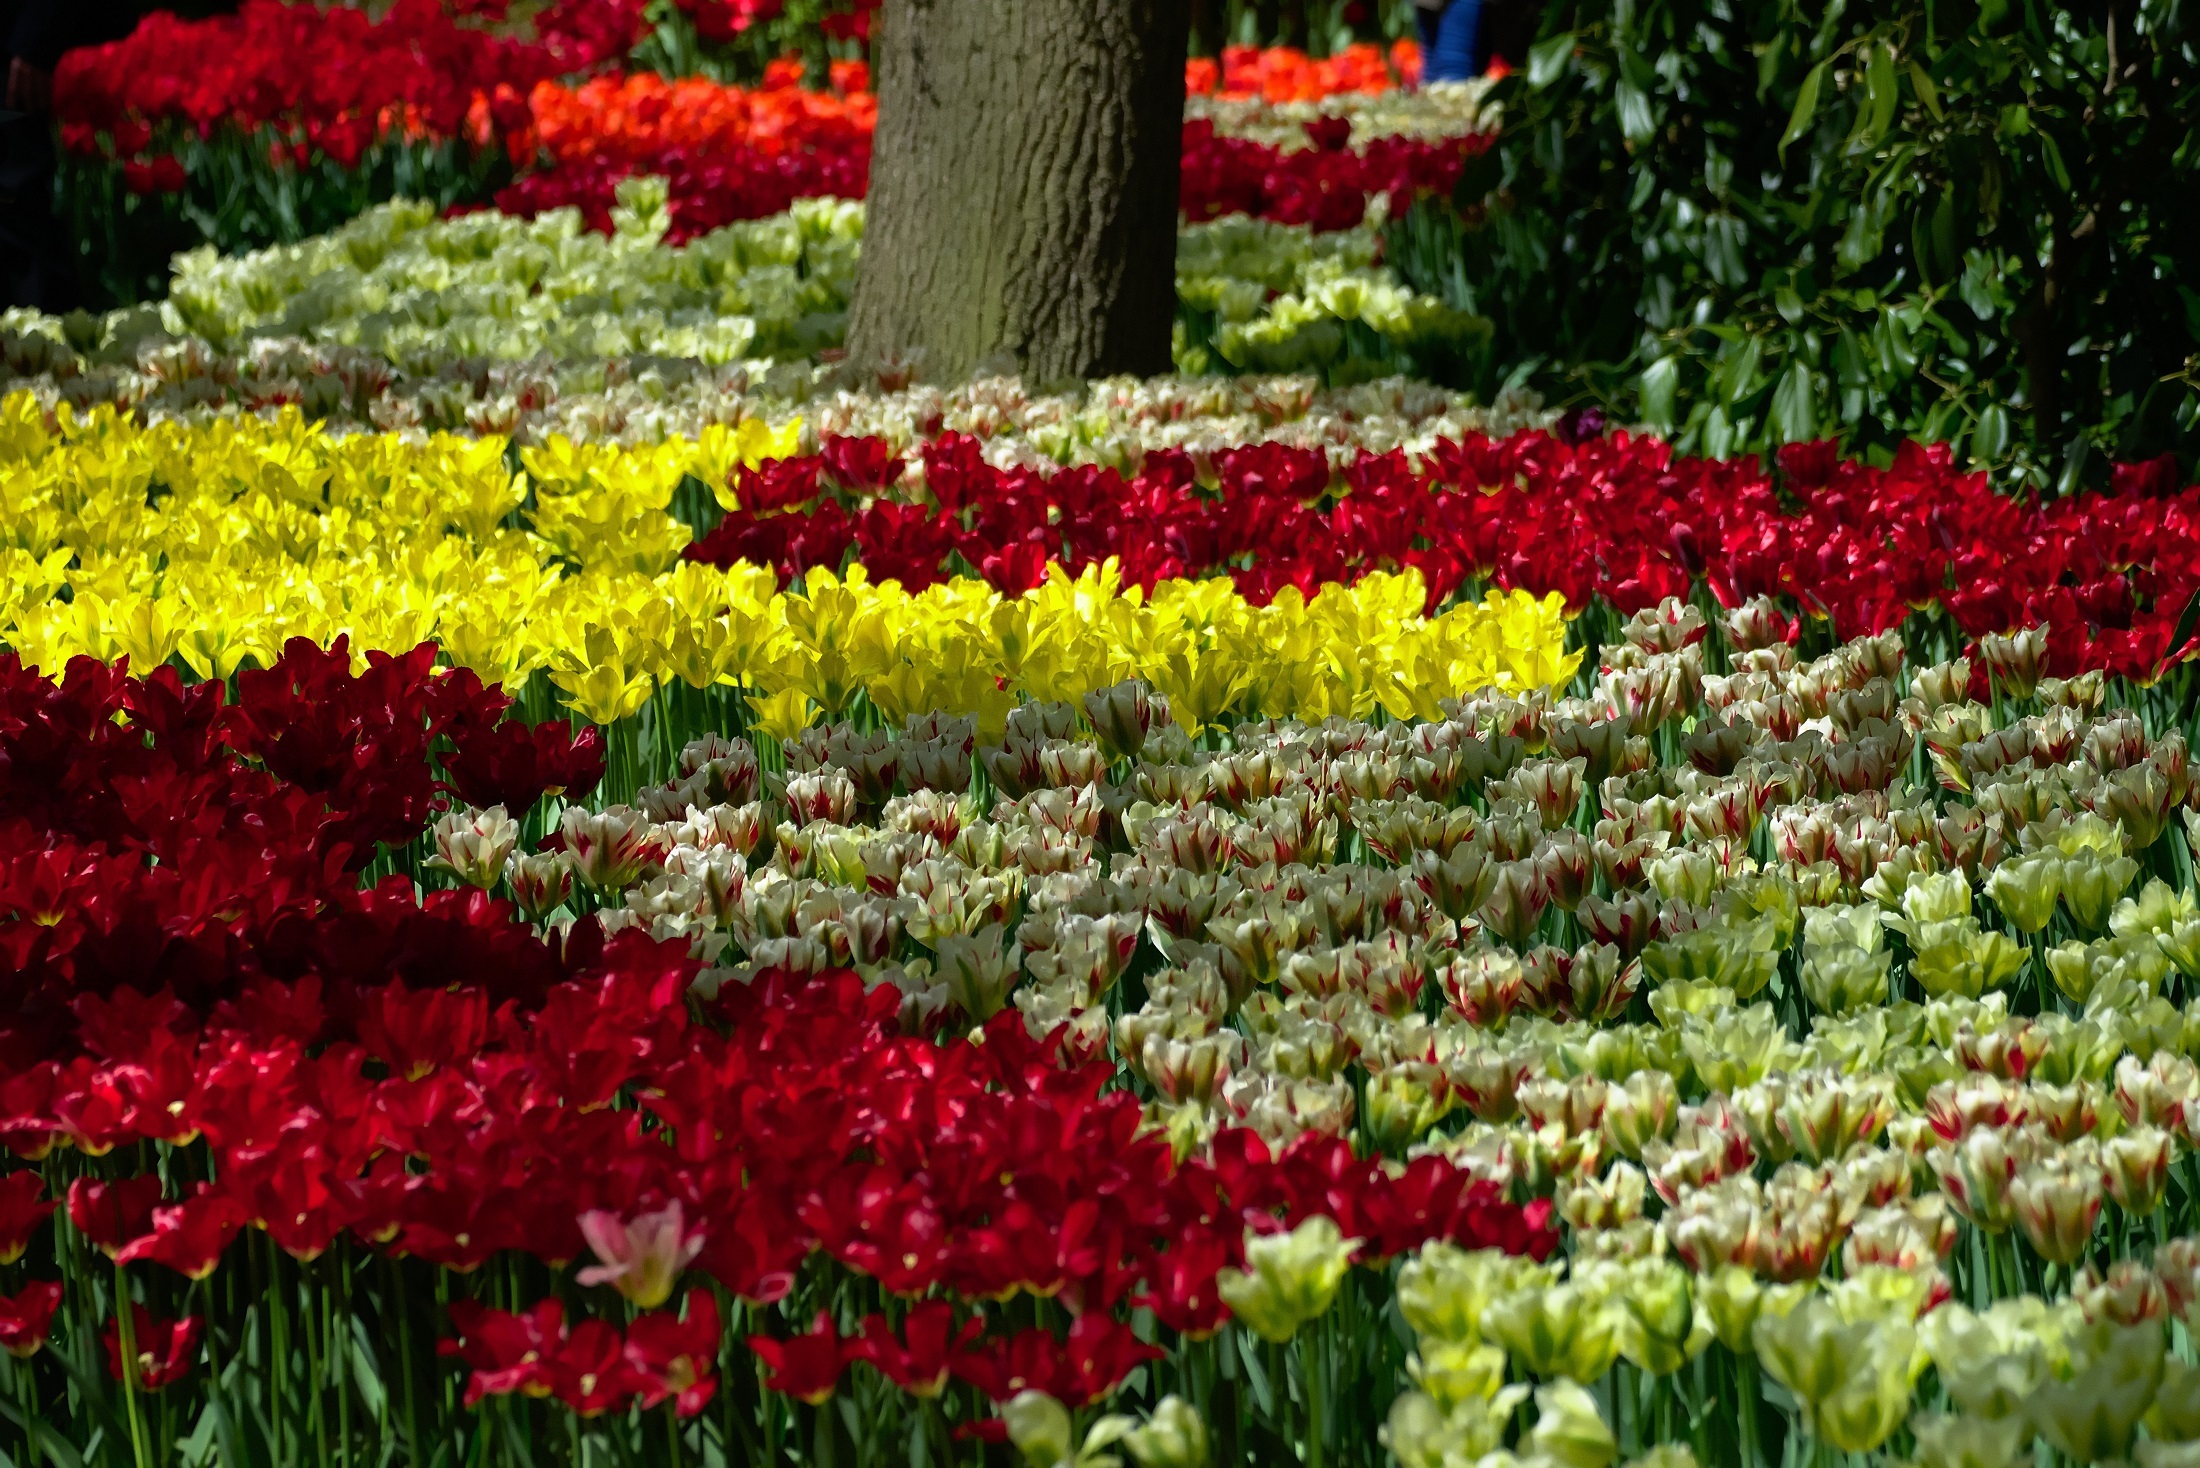 Tulips in the garden photo